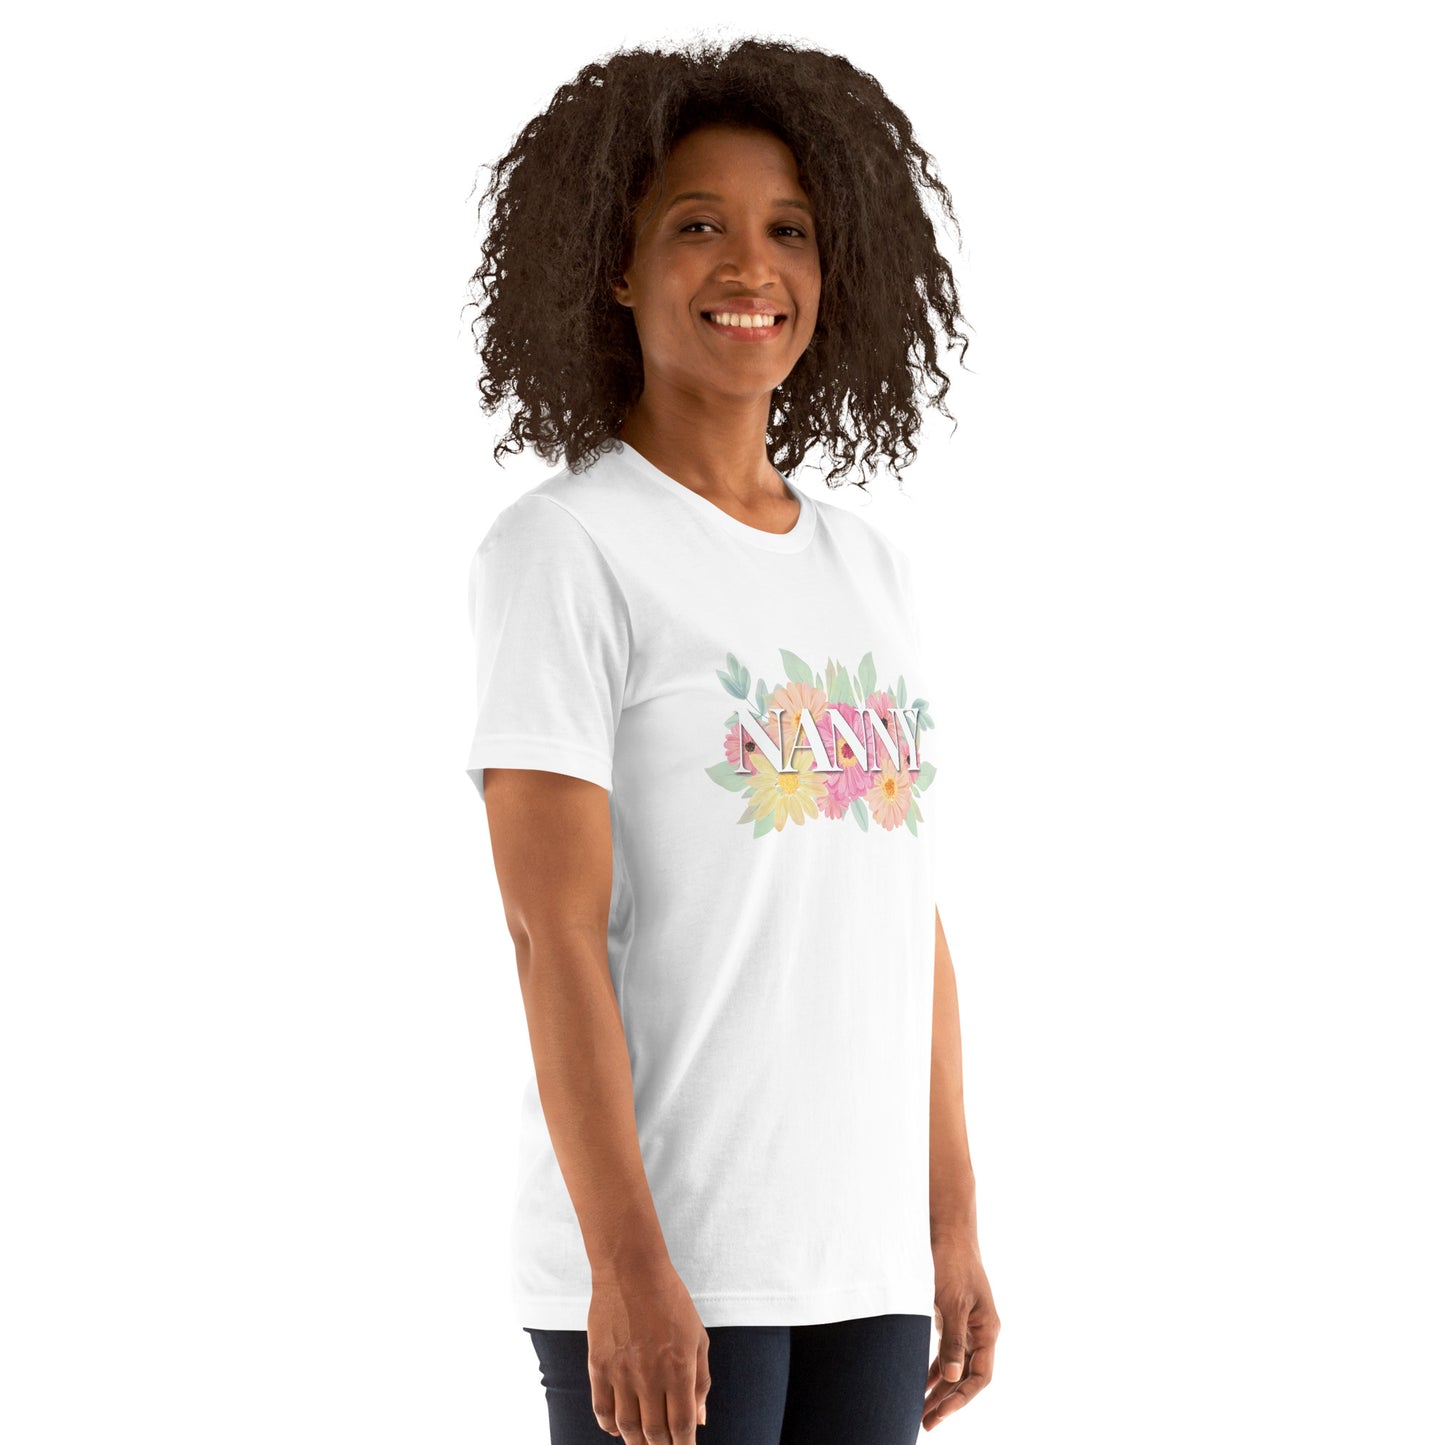 Nanny floral T-Shirt